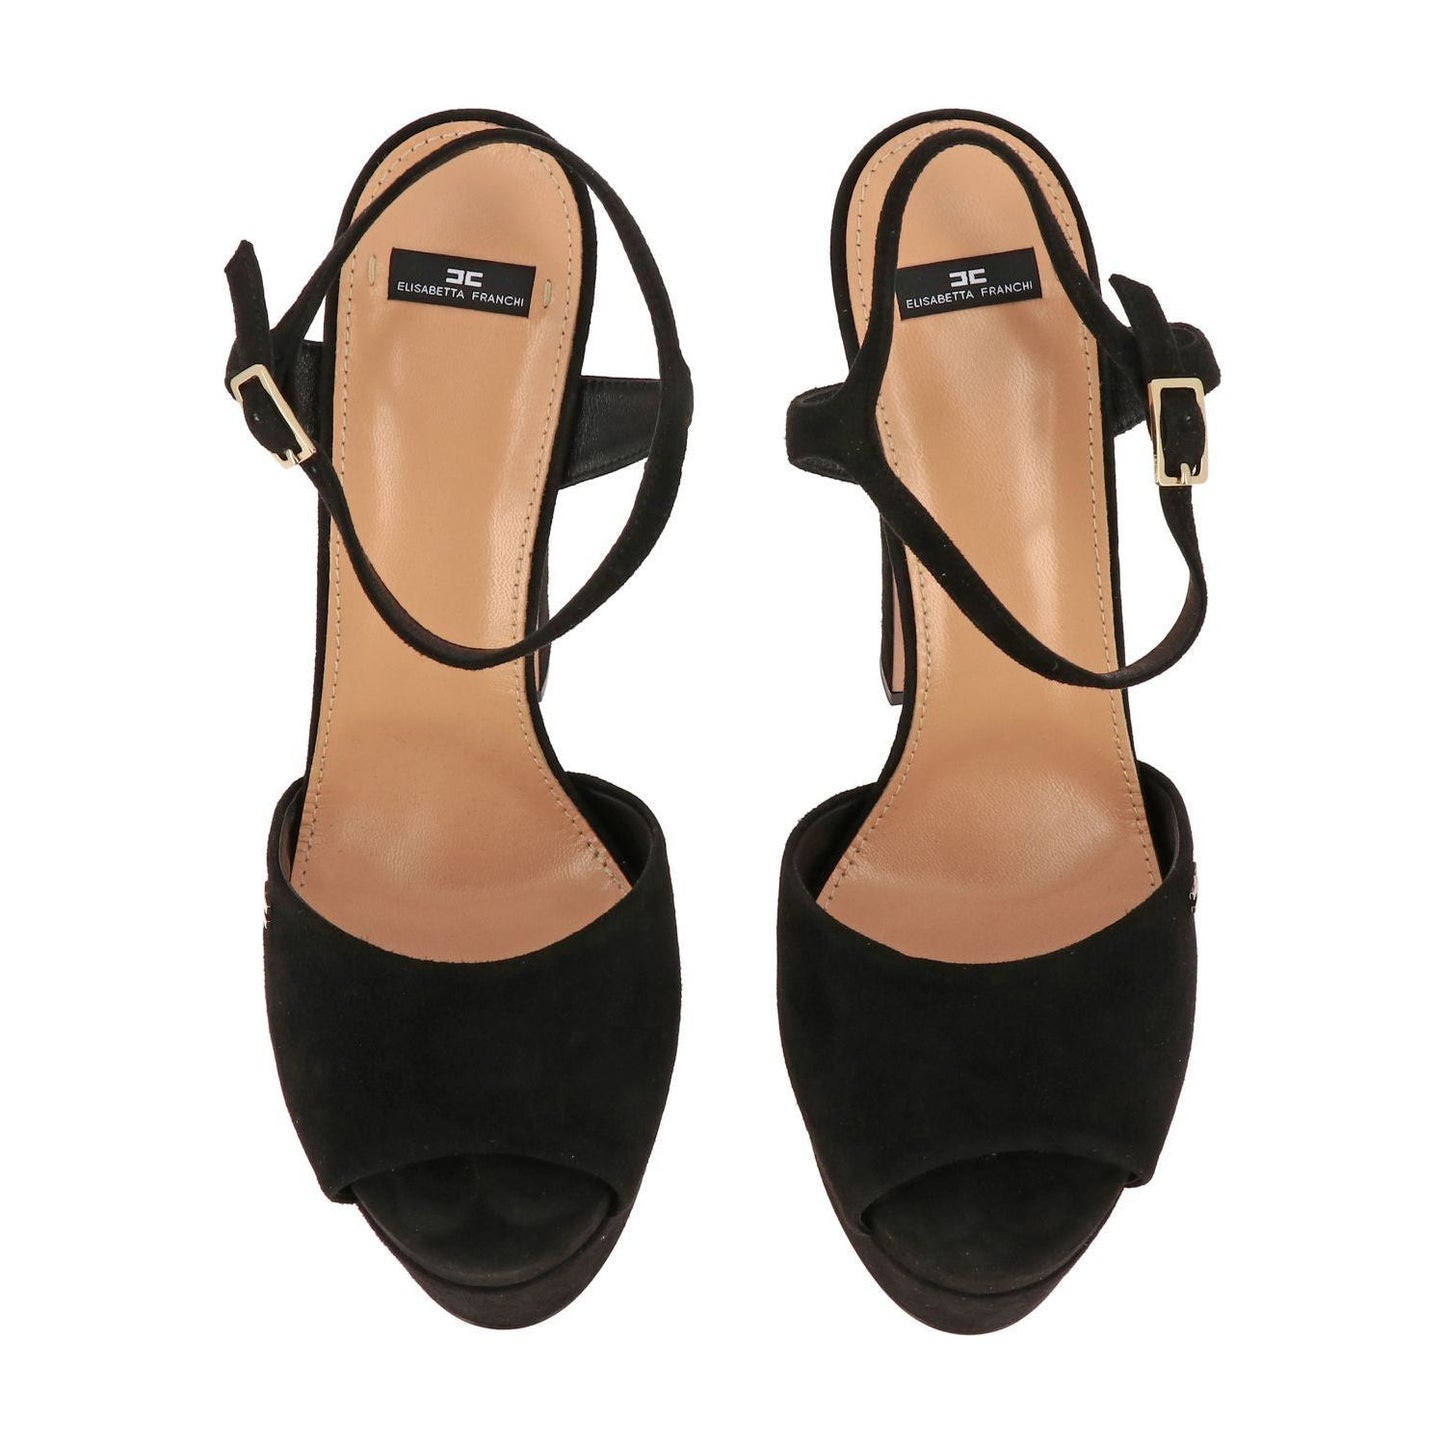 Elisabetta Franchi Chic Suede Enveloping High-Heeled Sandals chic-suede-enveloping-high-heeled-sandals